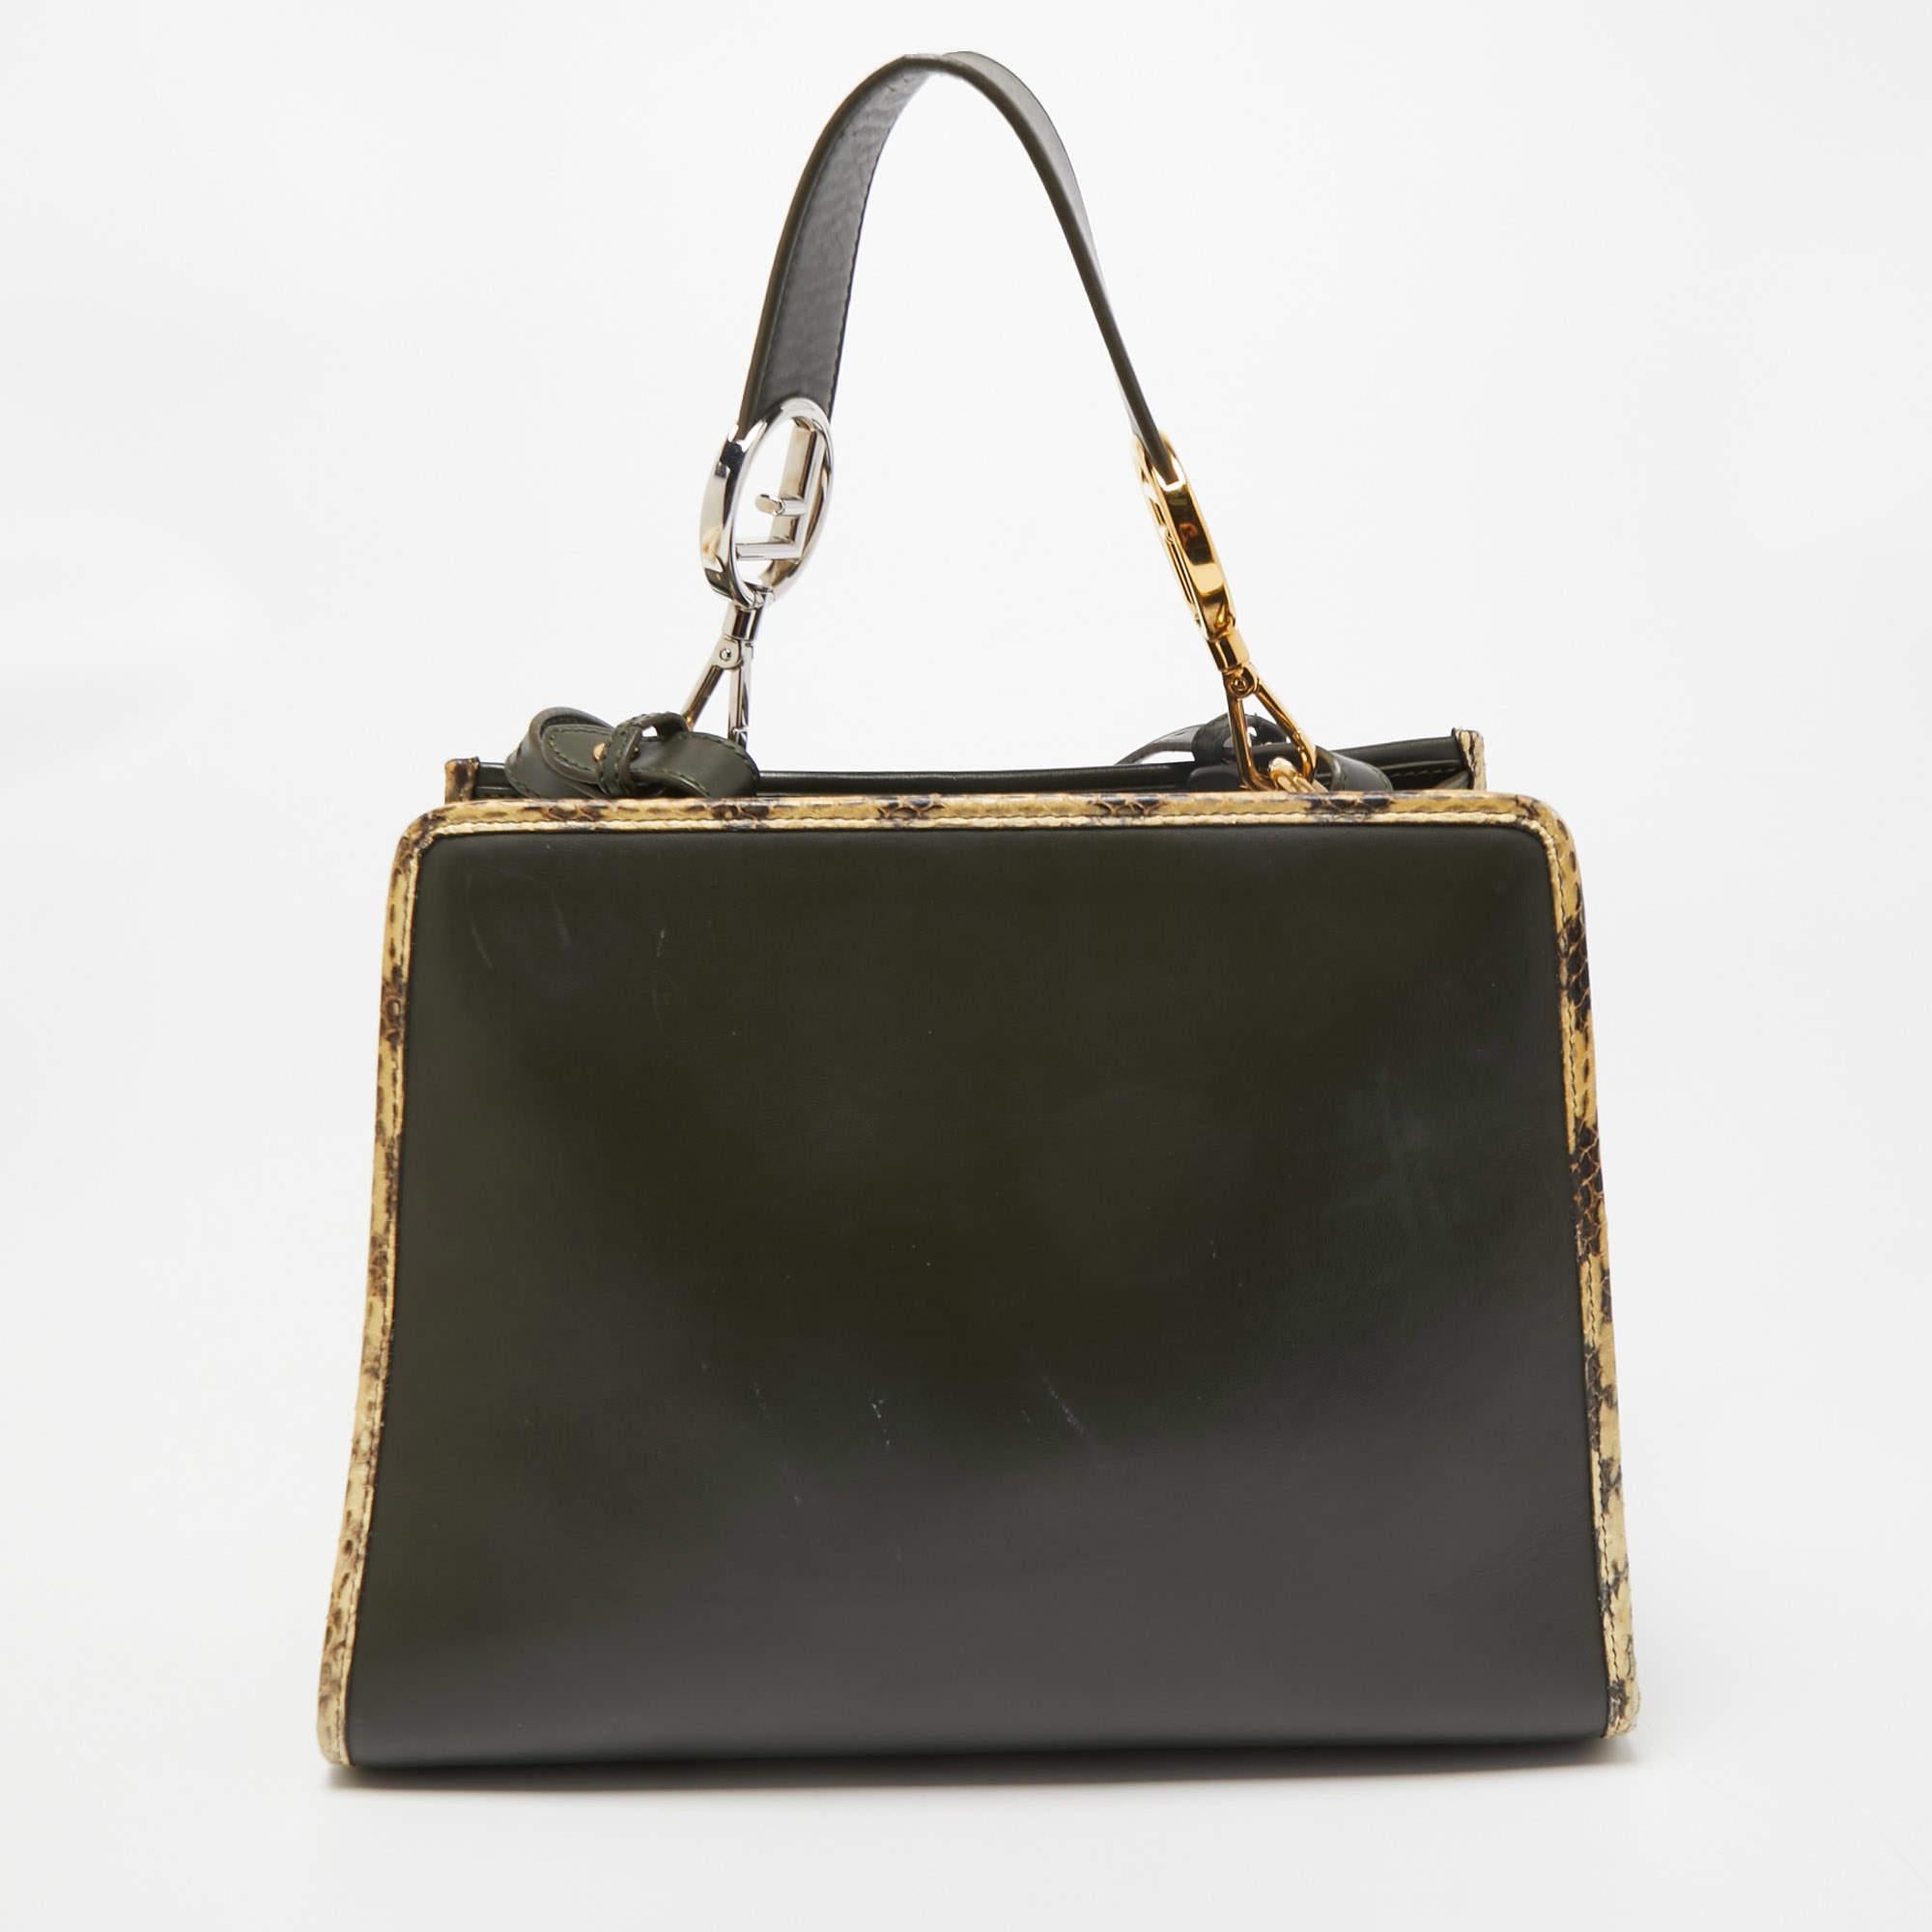 Fendi Green/Beige Leather and Watersnake Trim Small Runaway Top Handle Bag 8